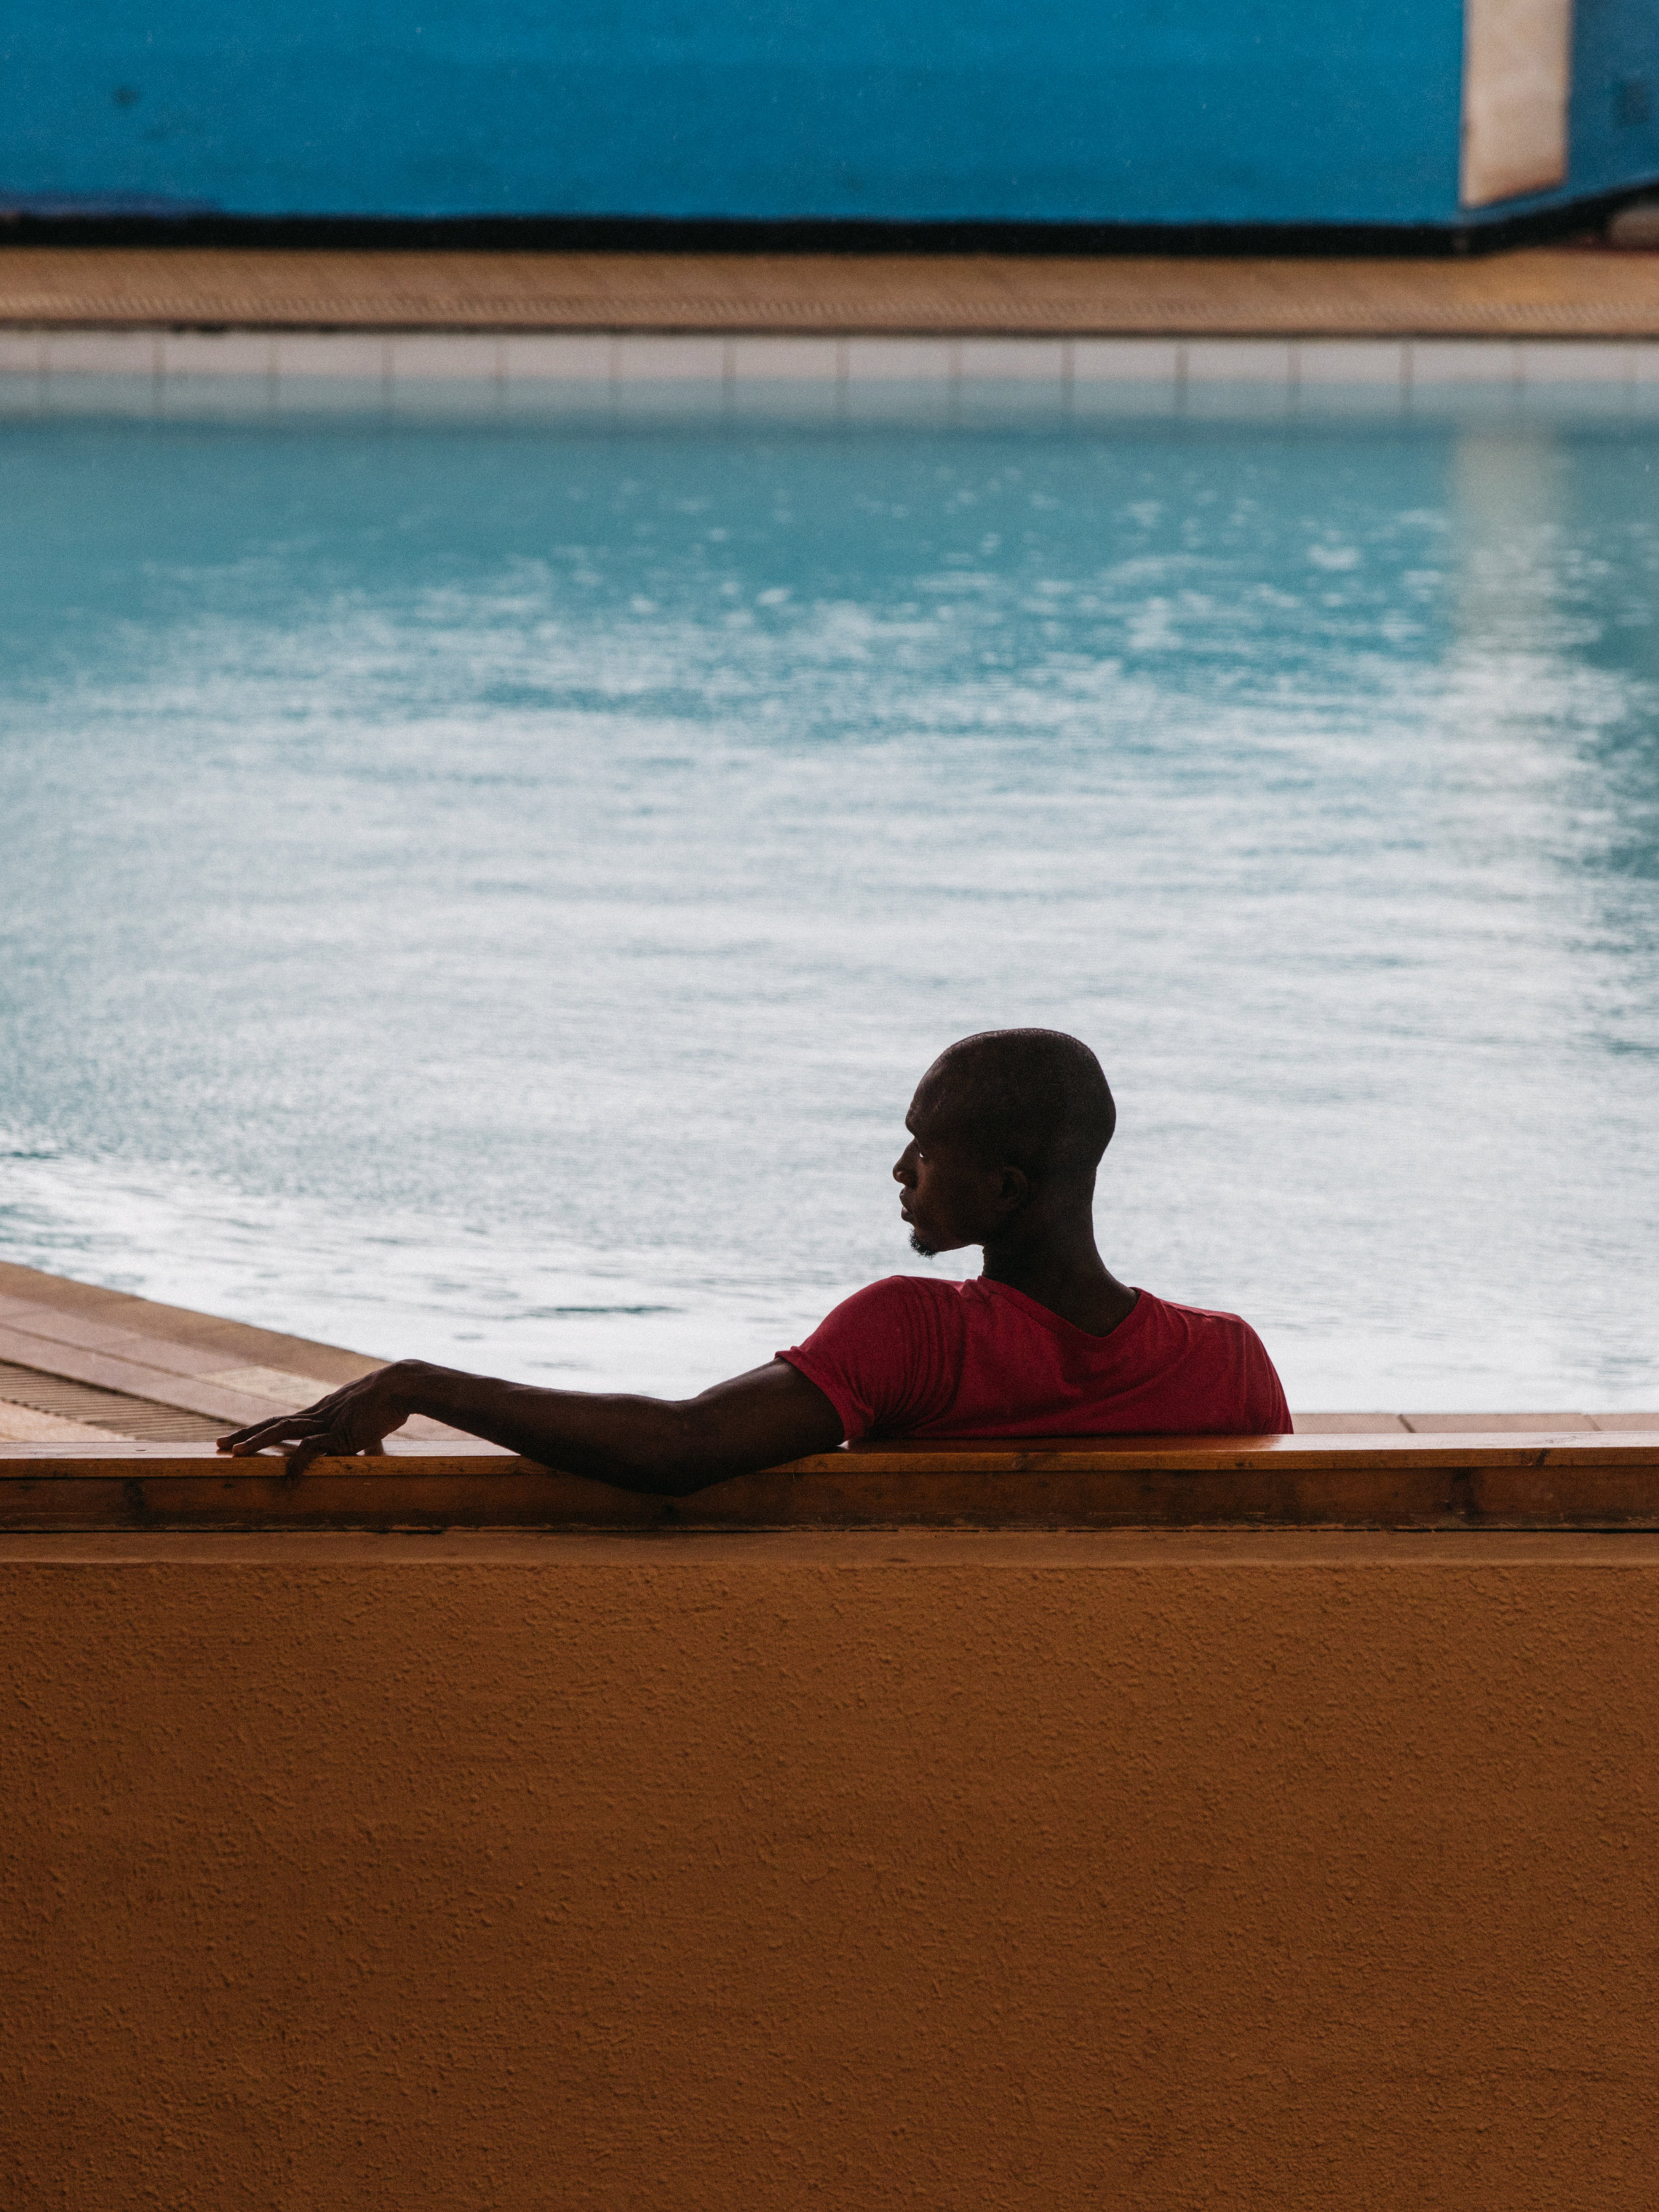 An Intimate Portrait of Life in Sierra Leone